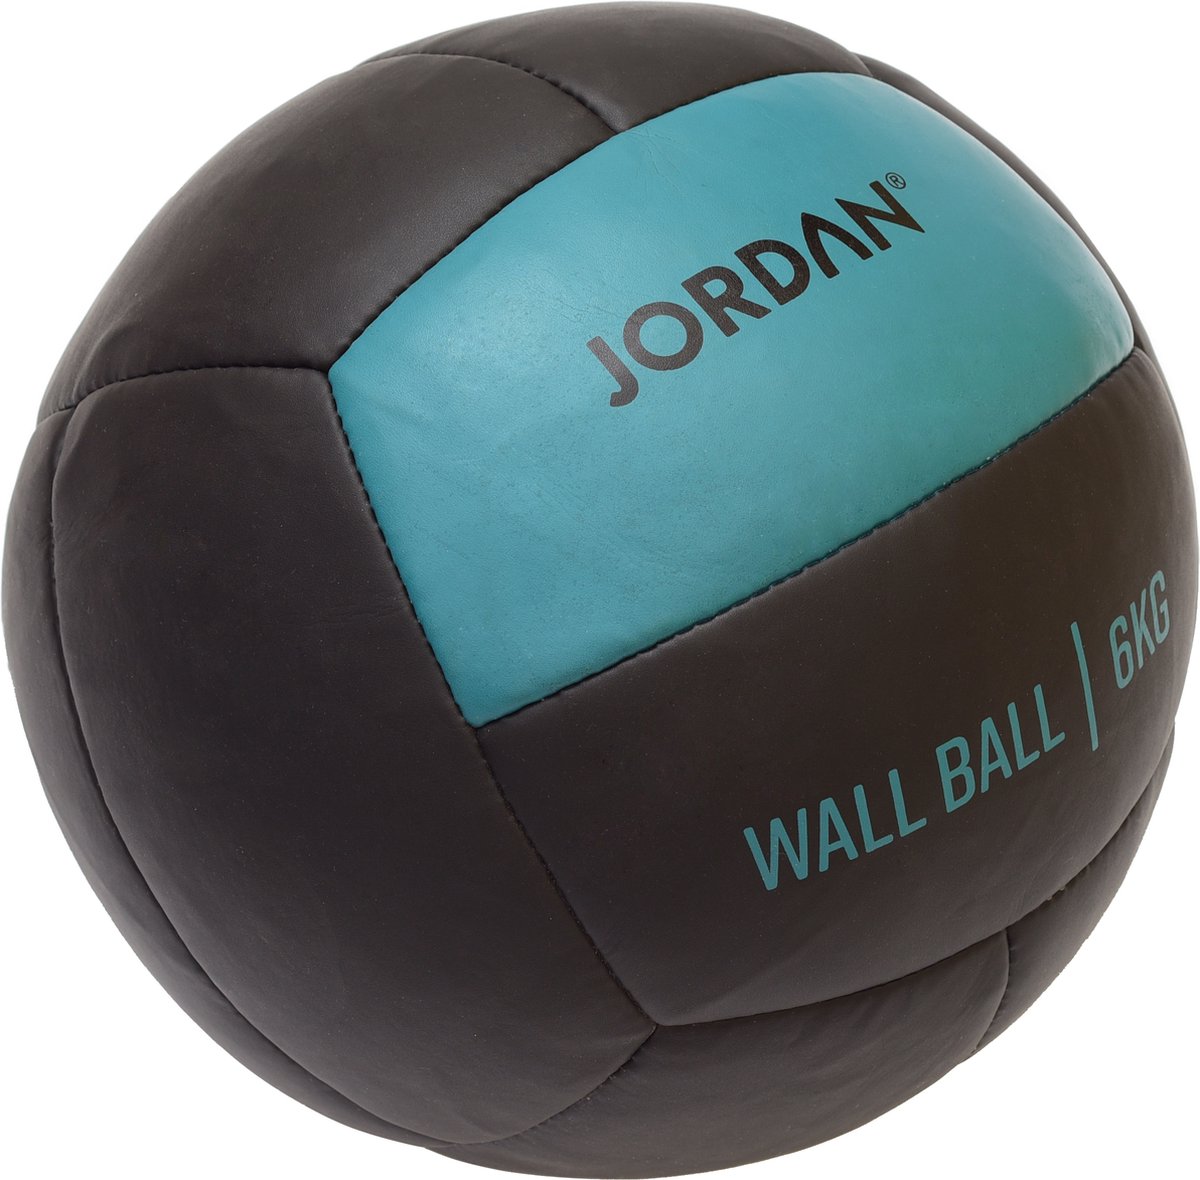 6kg Wallball- Oversize Medicine ball (teal)